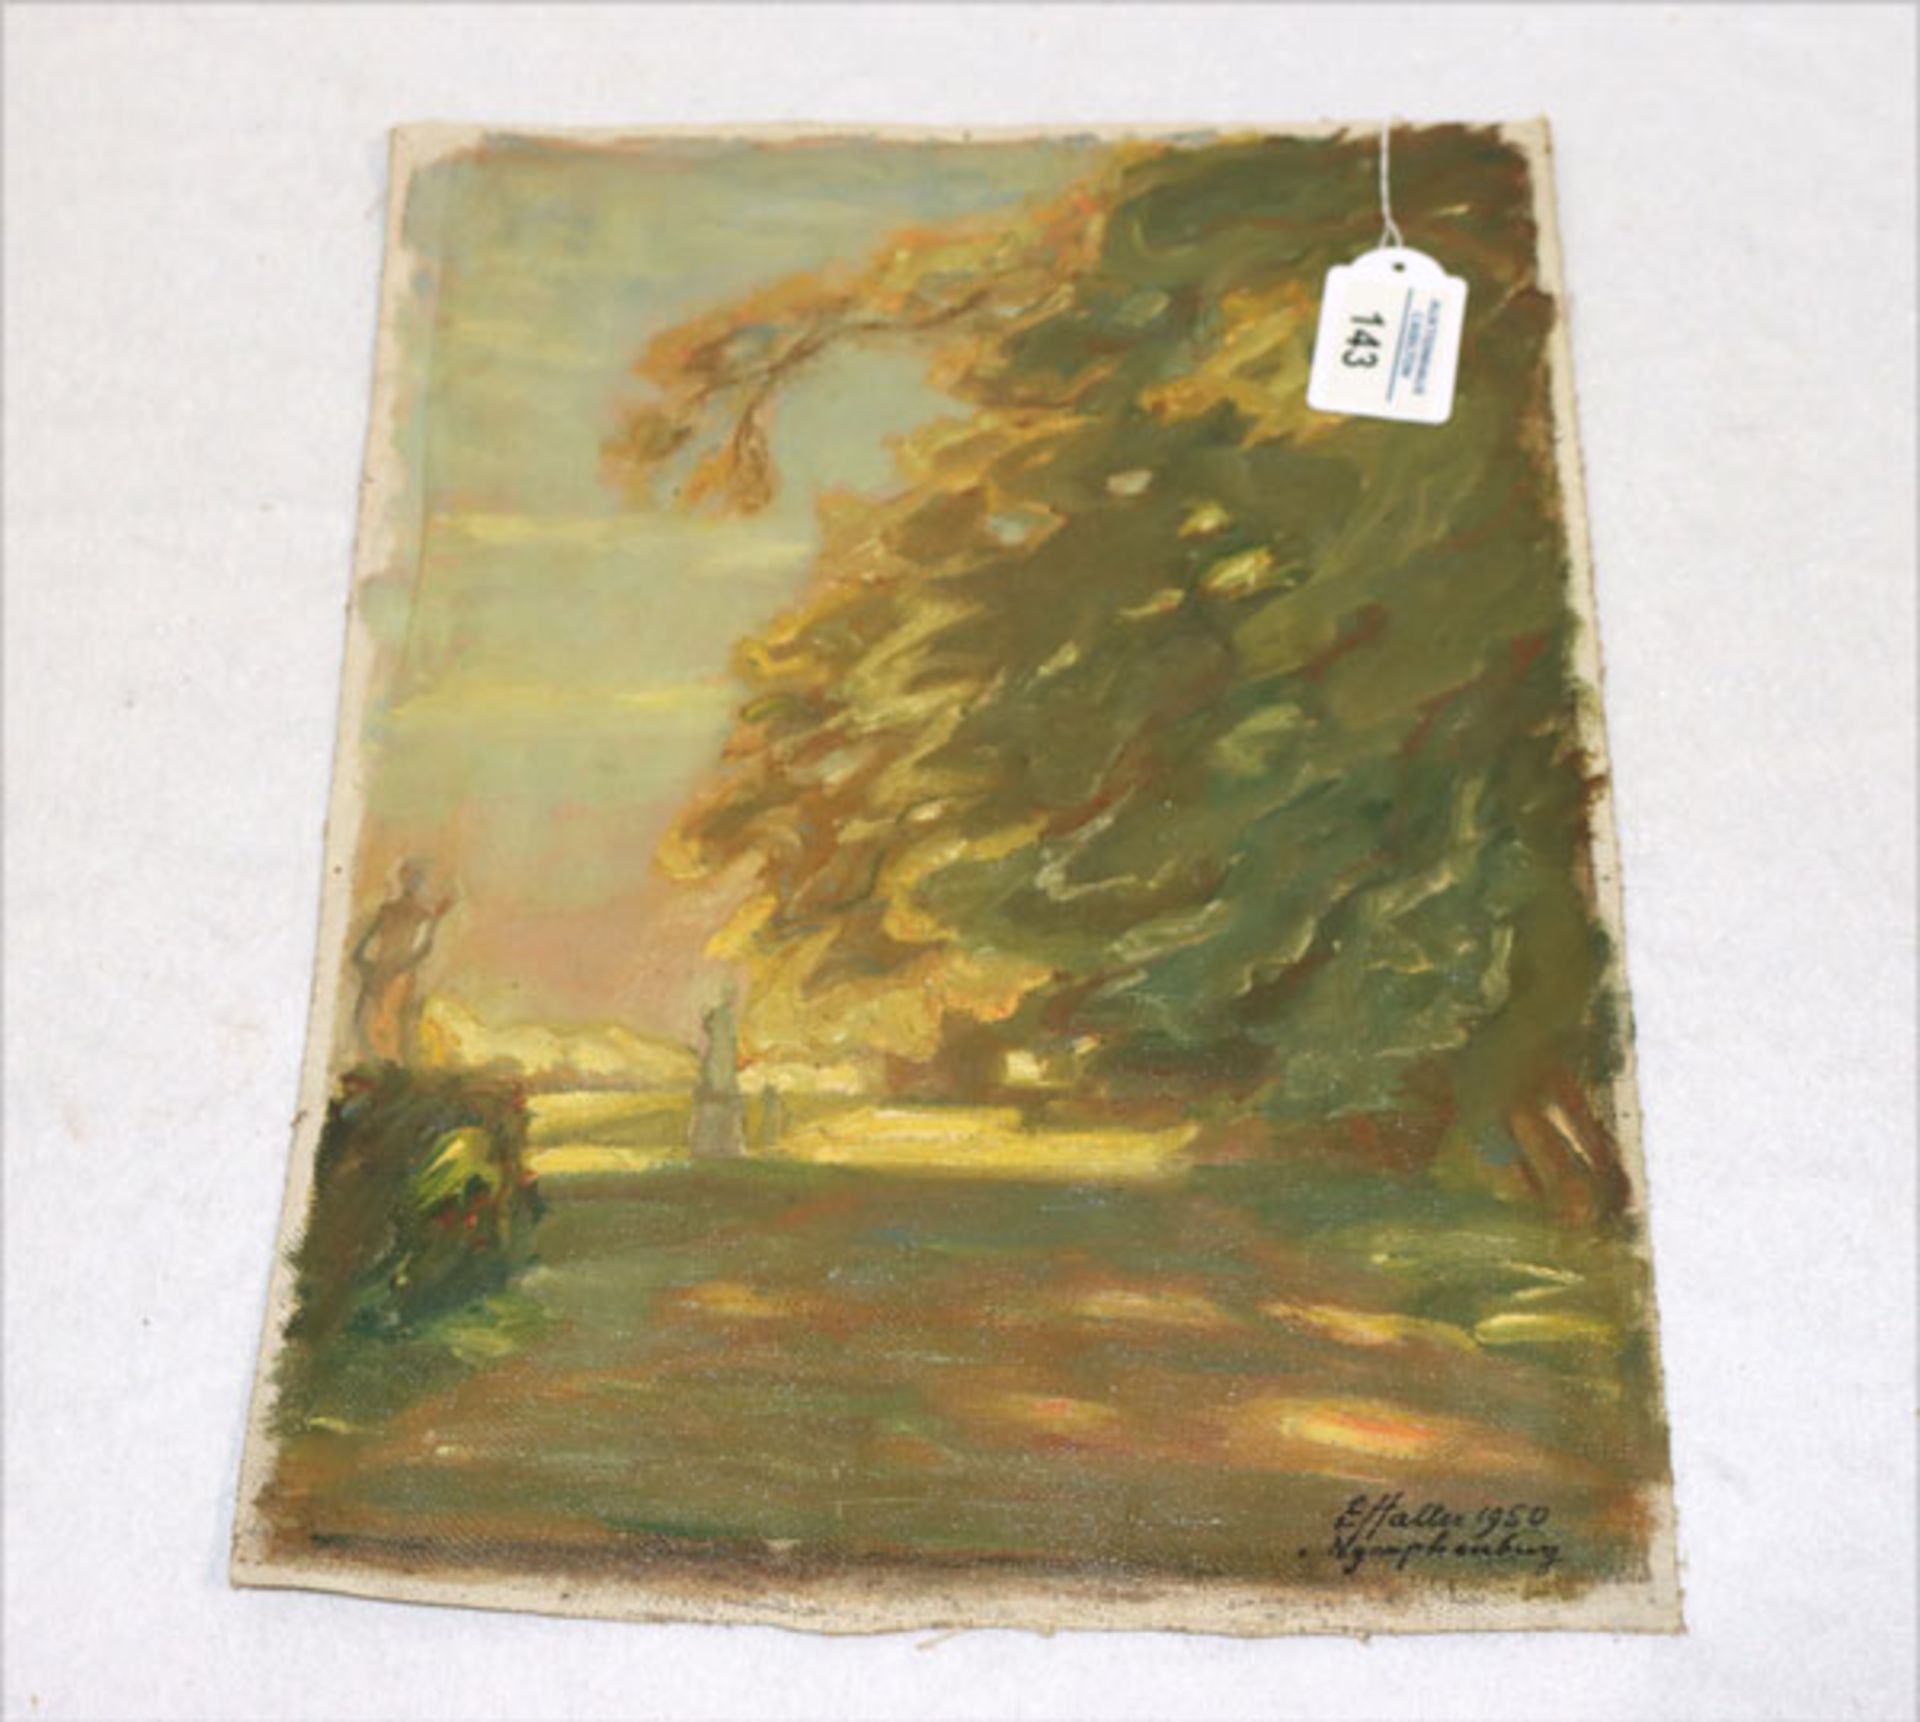 Gemälde ÖL/LW 'Nymphenburger Park', signiert E. Haller, 1950, Eugen Haller, * 1899 Stuttgart +